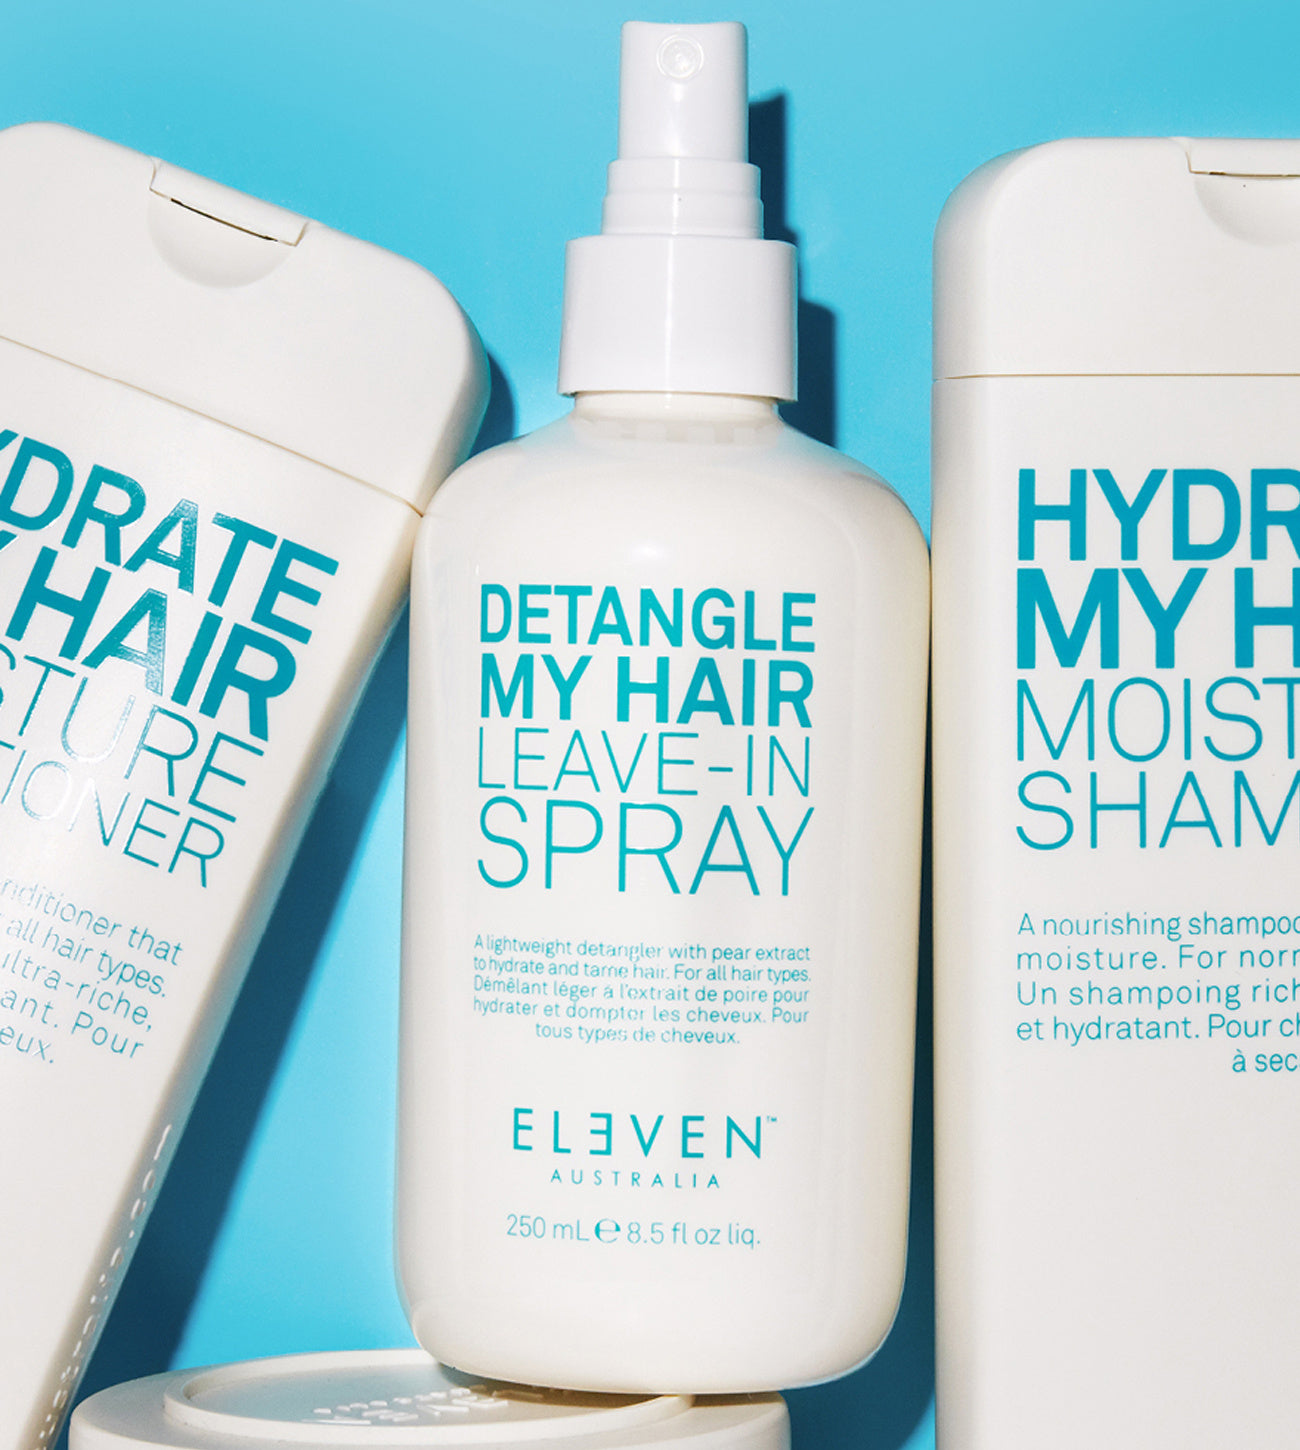 ELEVEN AUSTRALIA Detangle My Hair Leave-In Spray 250ml